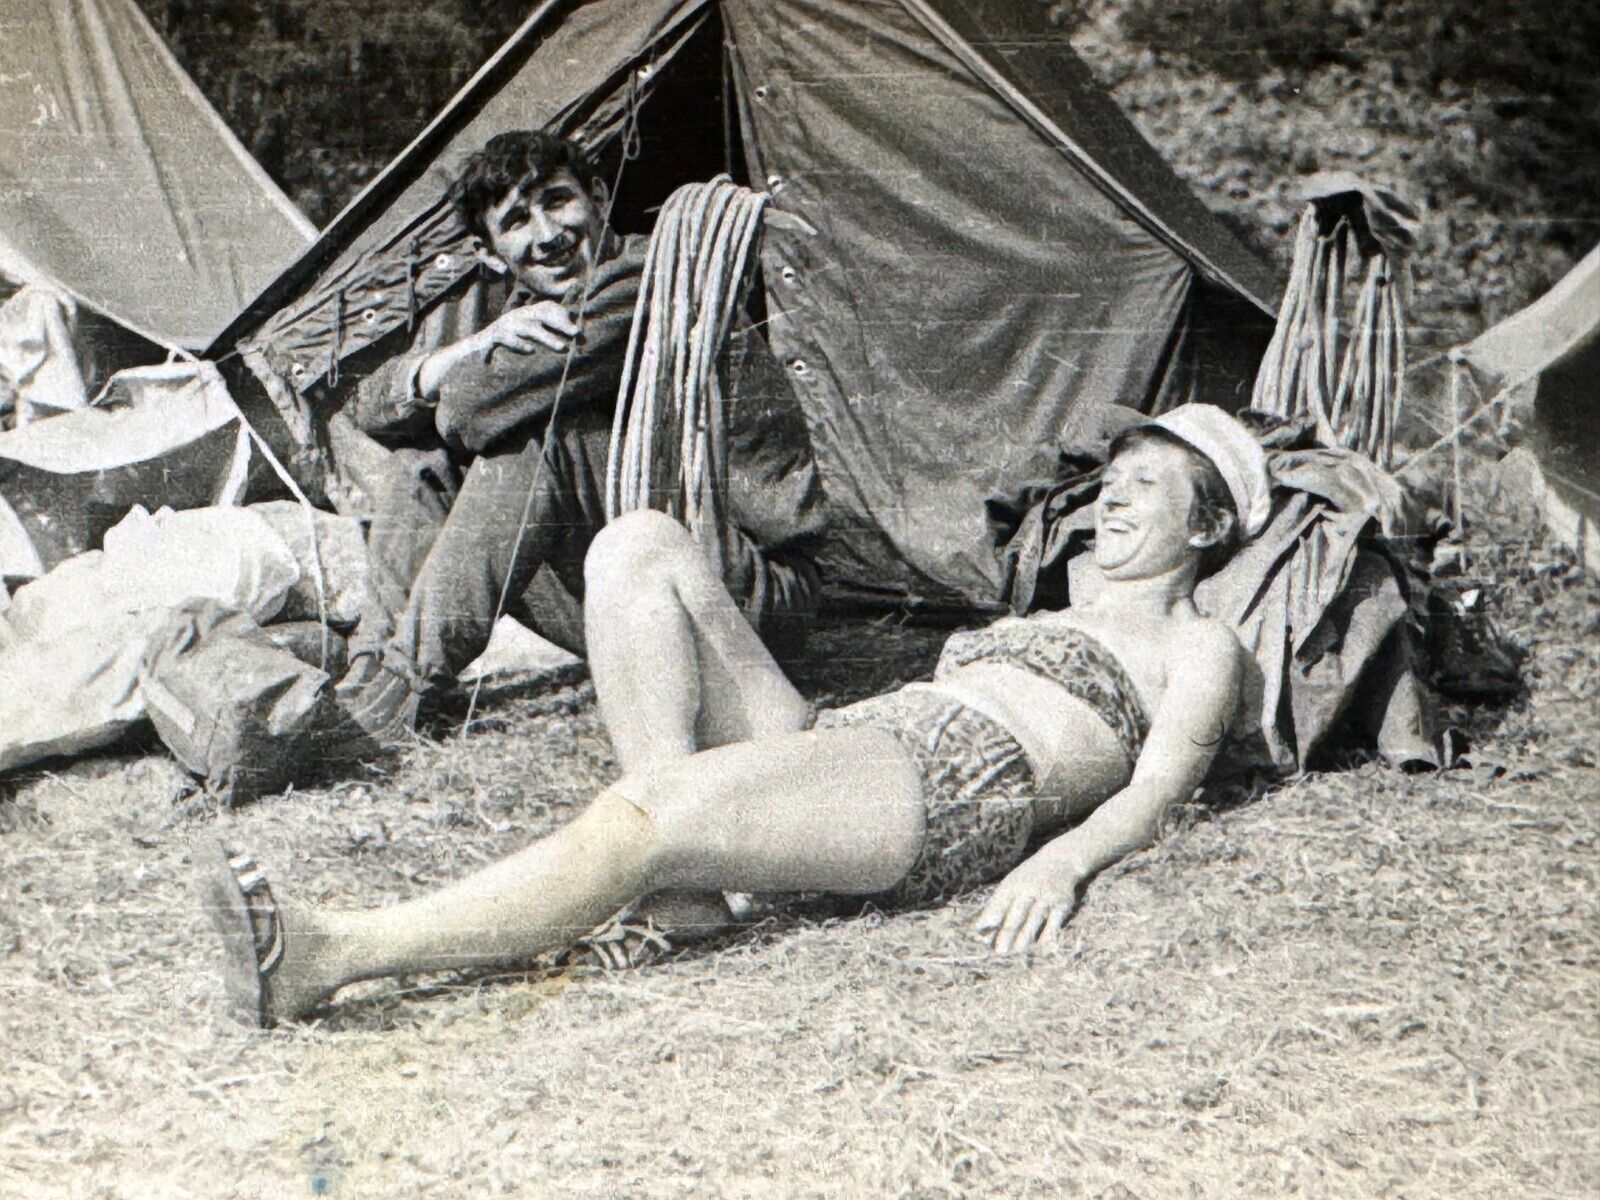 1960s Pretty Young Woman Bikini Man Tourists Camping Vintage B&W Photo